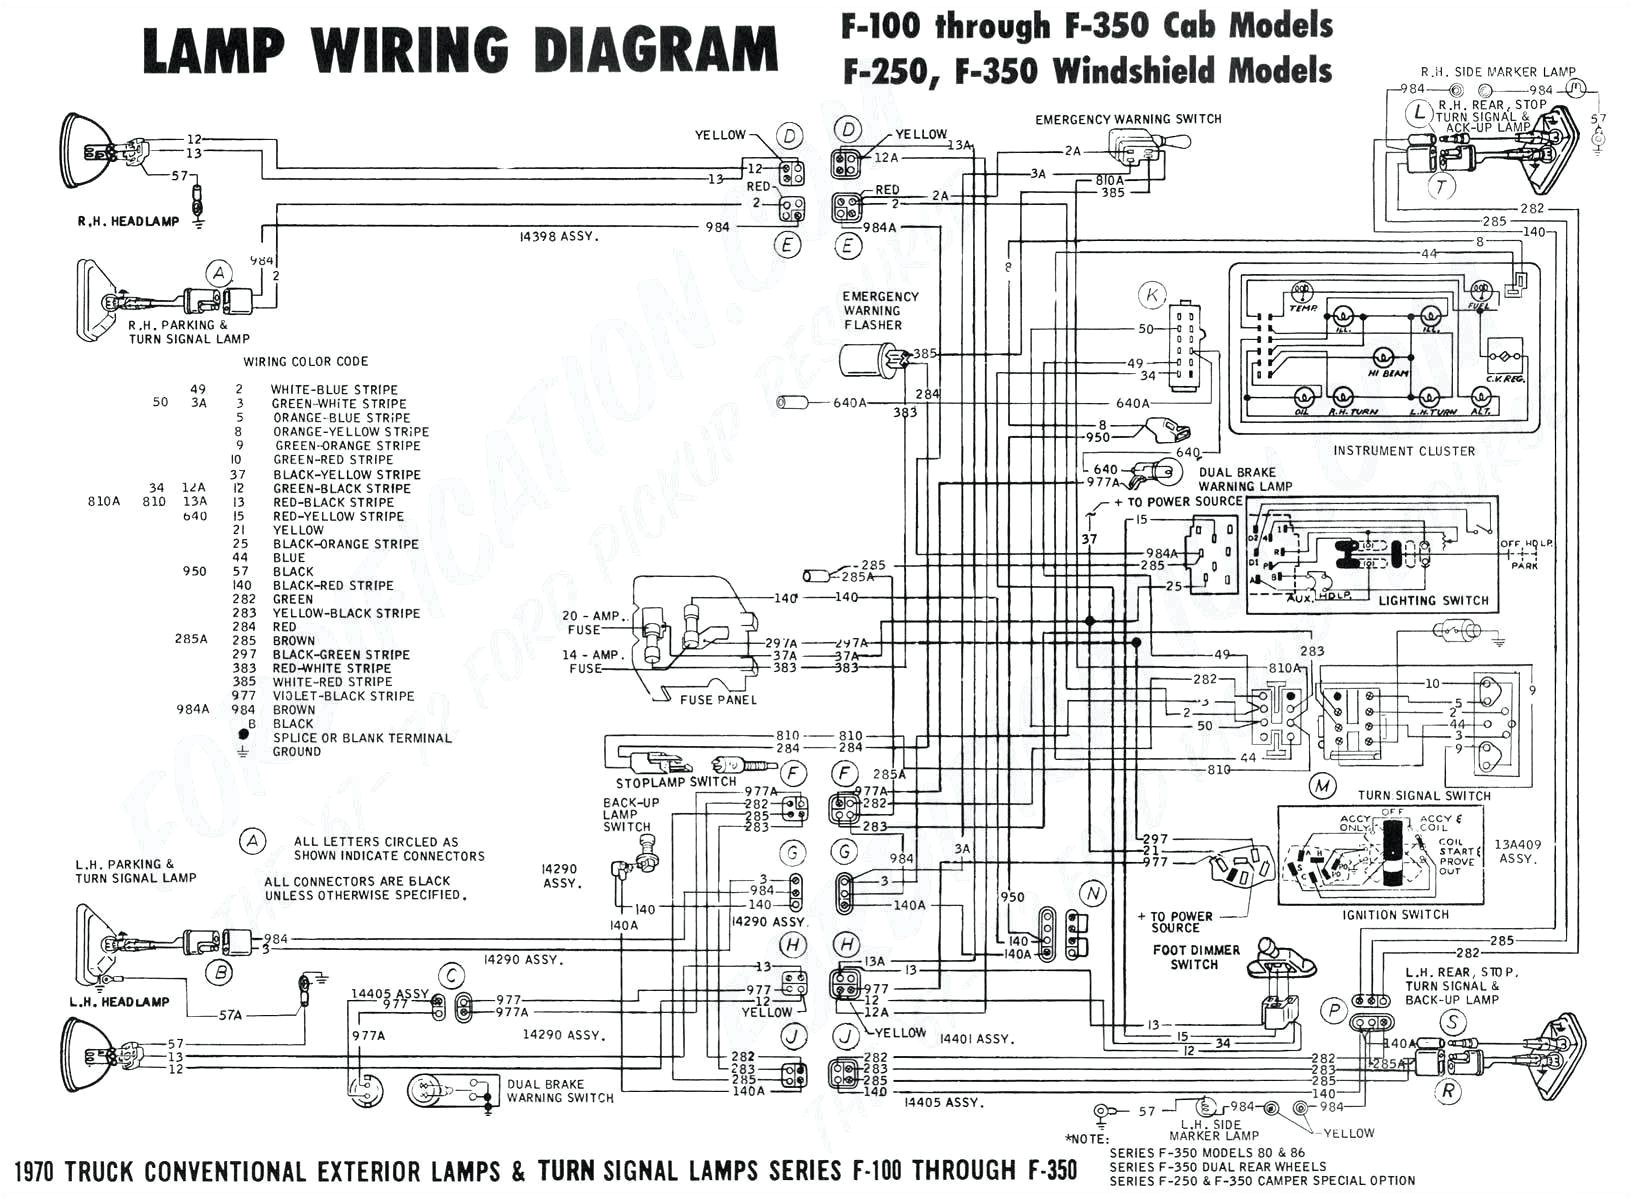 1996 ford e250 wiring diagram database wiring diagram e 250 wiring diagram wiring diagram 1996 ford